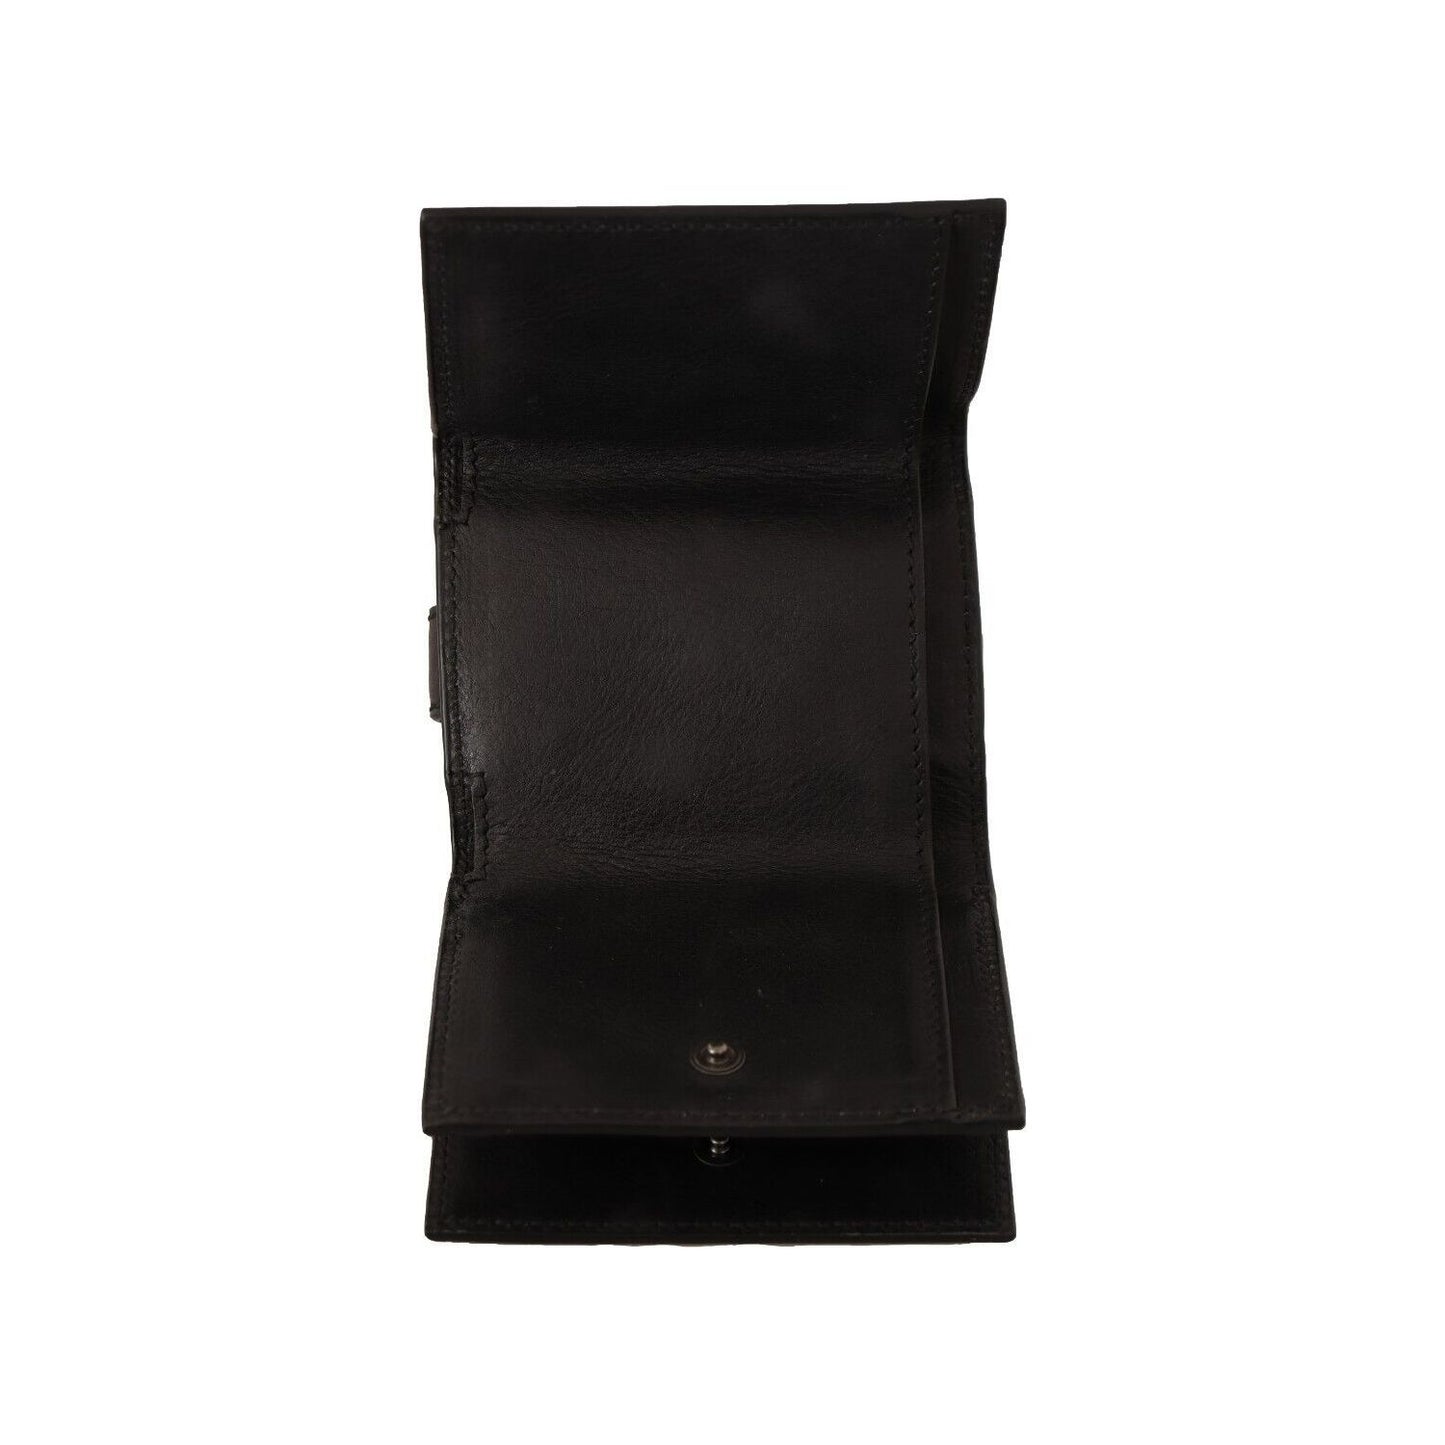 Dolce & Gabbana Elegant Leather Trifold Multi Kit with Strap black-leather-trifold-purse-belt-strap-multi-kit-wallet-1